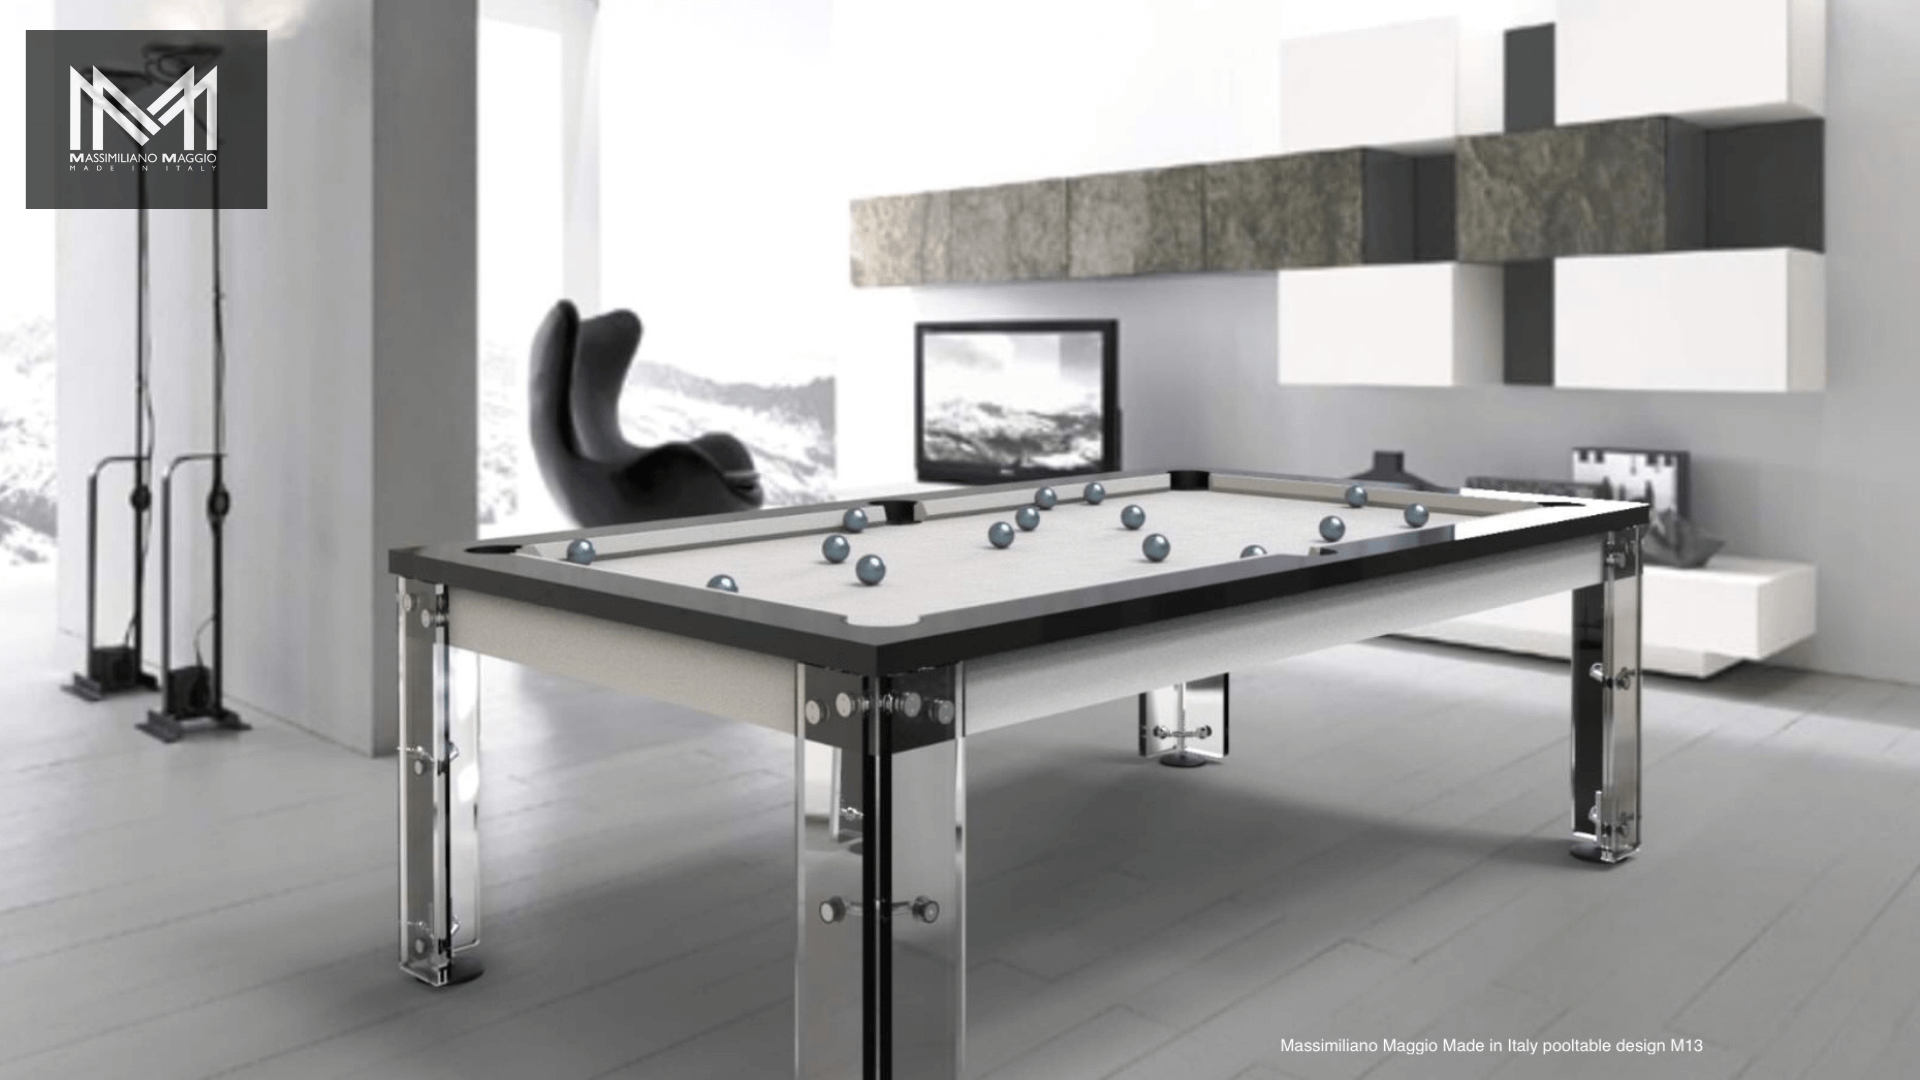 3 Biliardo M13 Massimiliano Maggio Made in italy Luxury Pool Table design Ziggurat 1 1